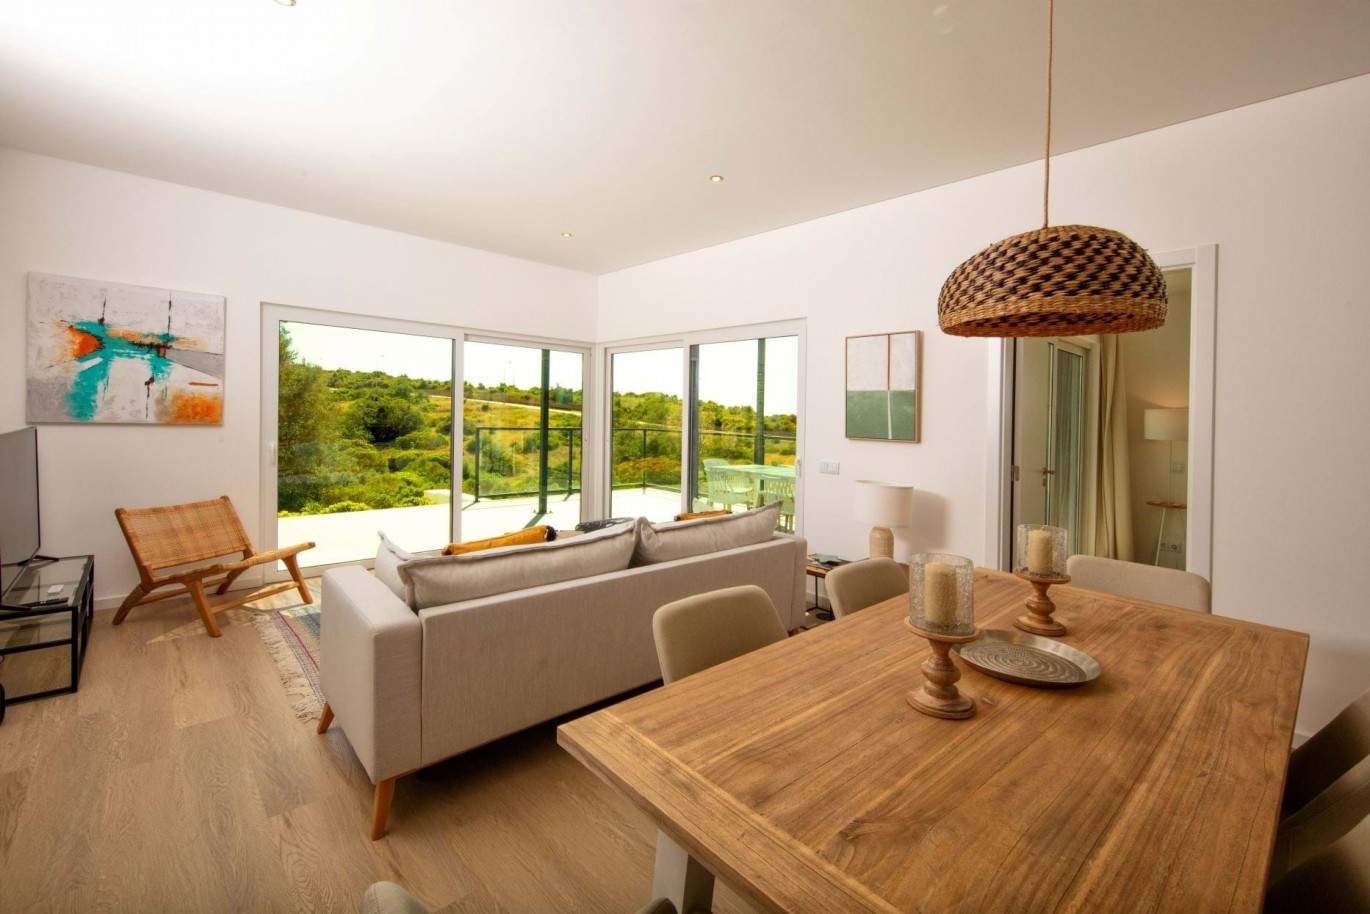 2+1 bedroom villa in resort, for sale in Carvoeiro, Algarve_204876